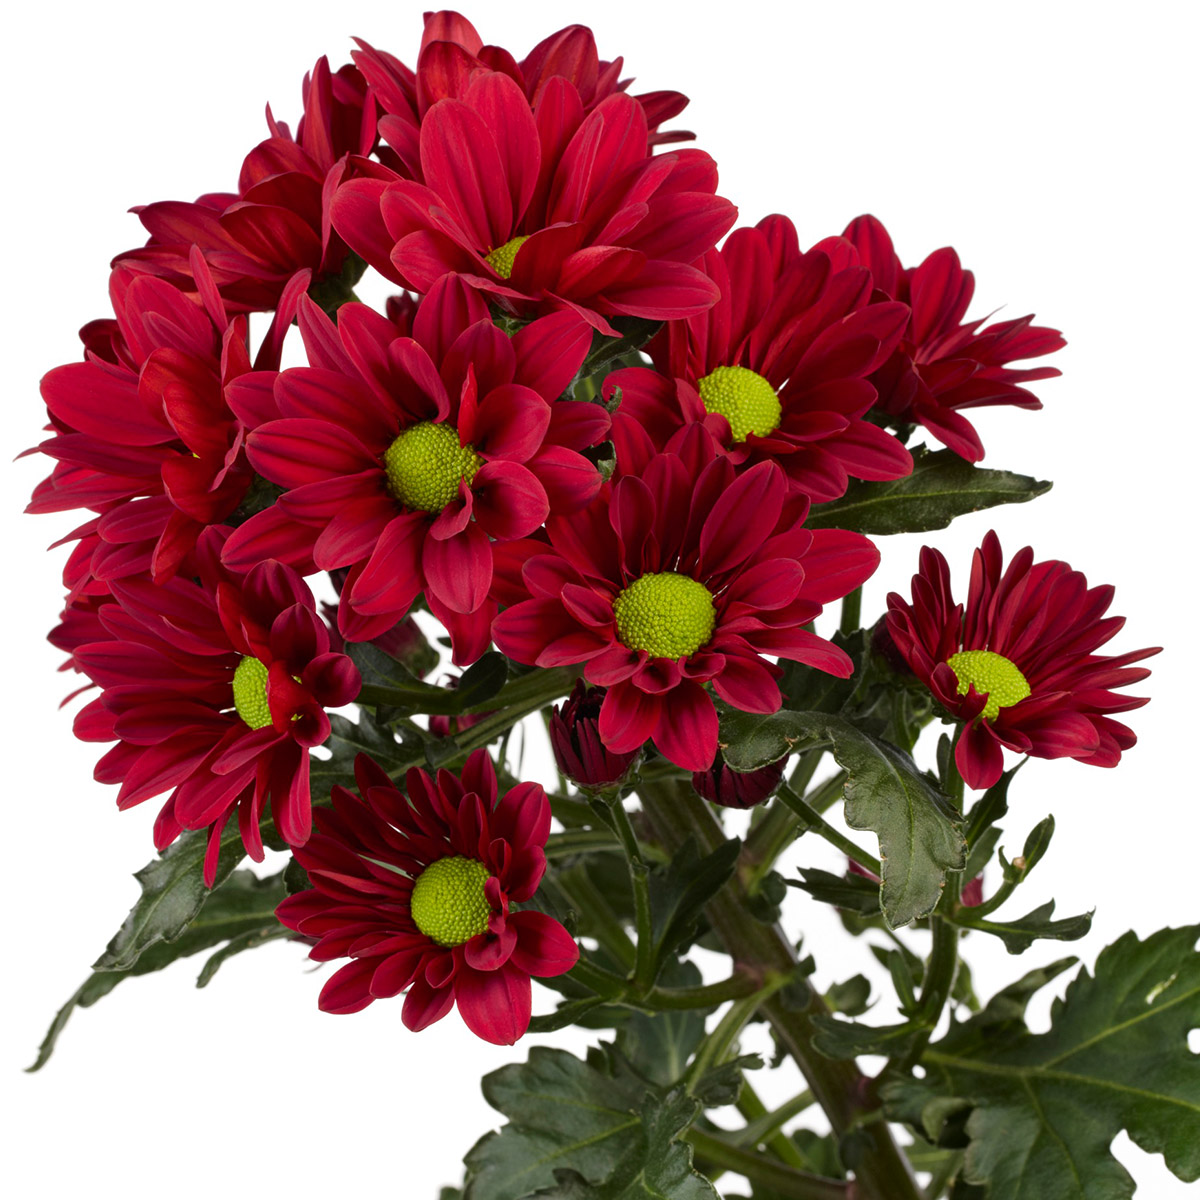 red-chrysants-for-valentine-of-course-royal-van-zanten-01-chrysanthemum-barolo